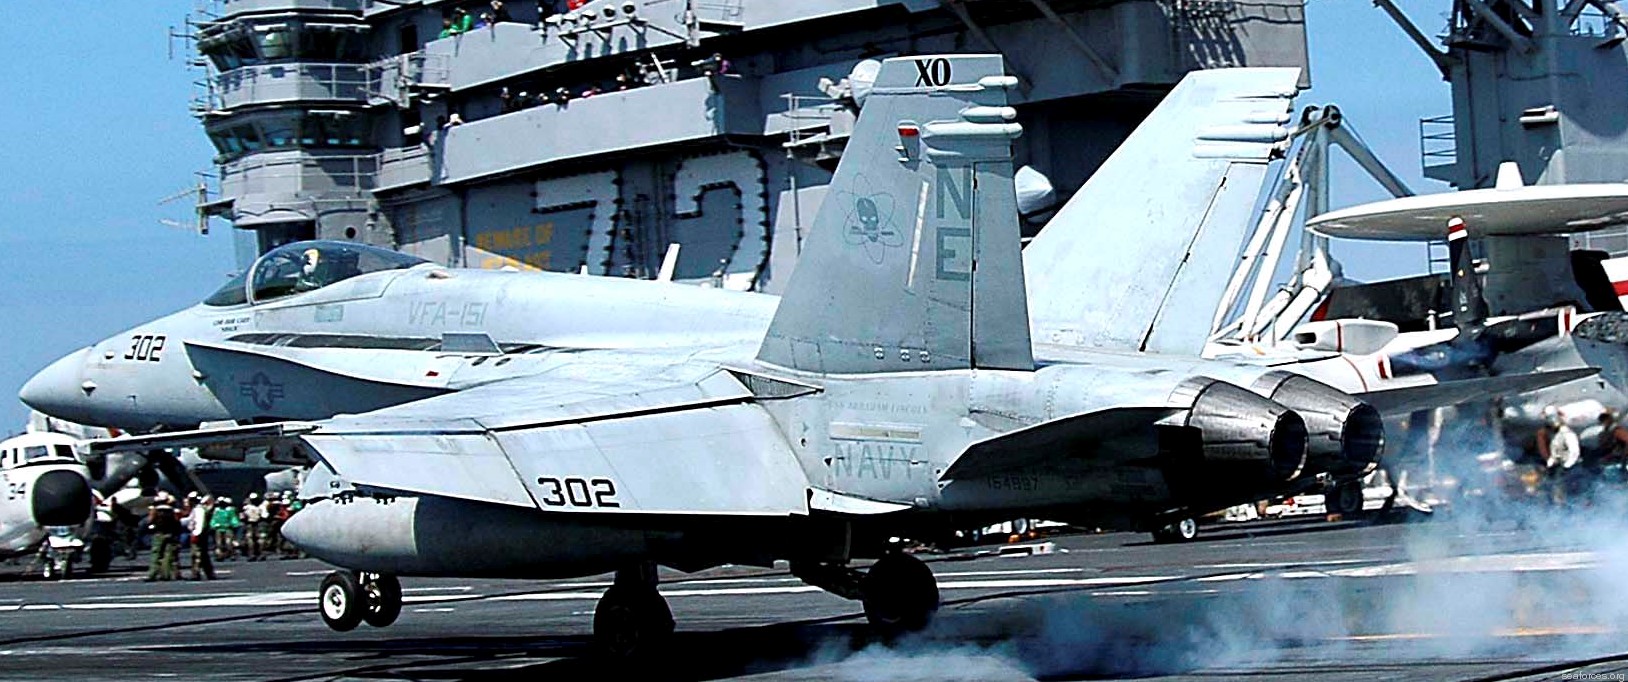 vfa-151 vigilantes strike fighter squadron navy f/a-18c hornet carrier air wing cvw-2 uss abraham lincoln cvn-72 60